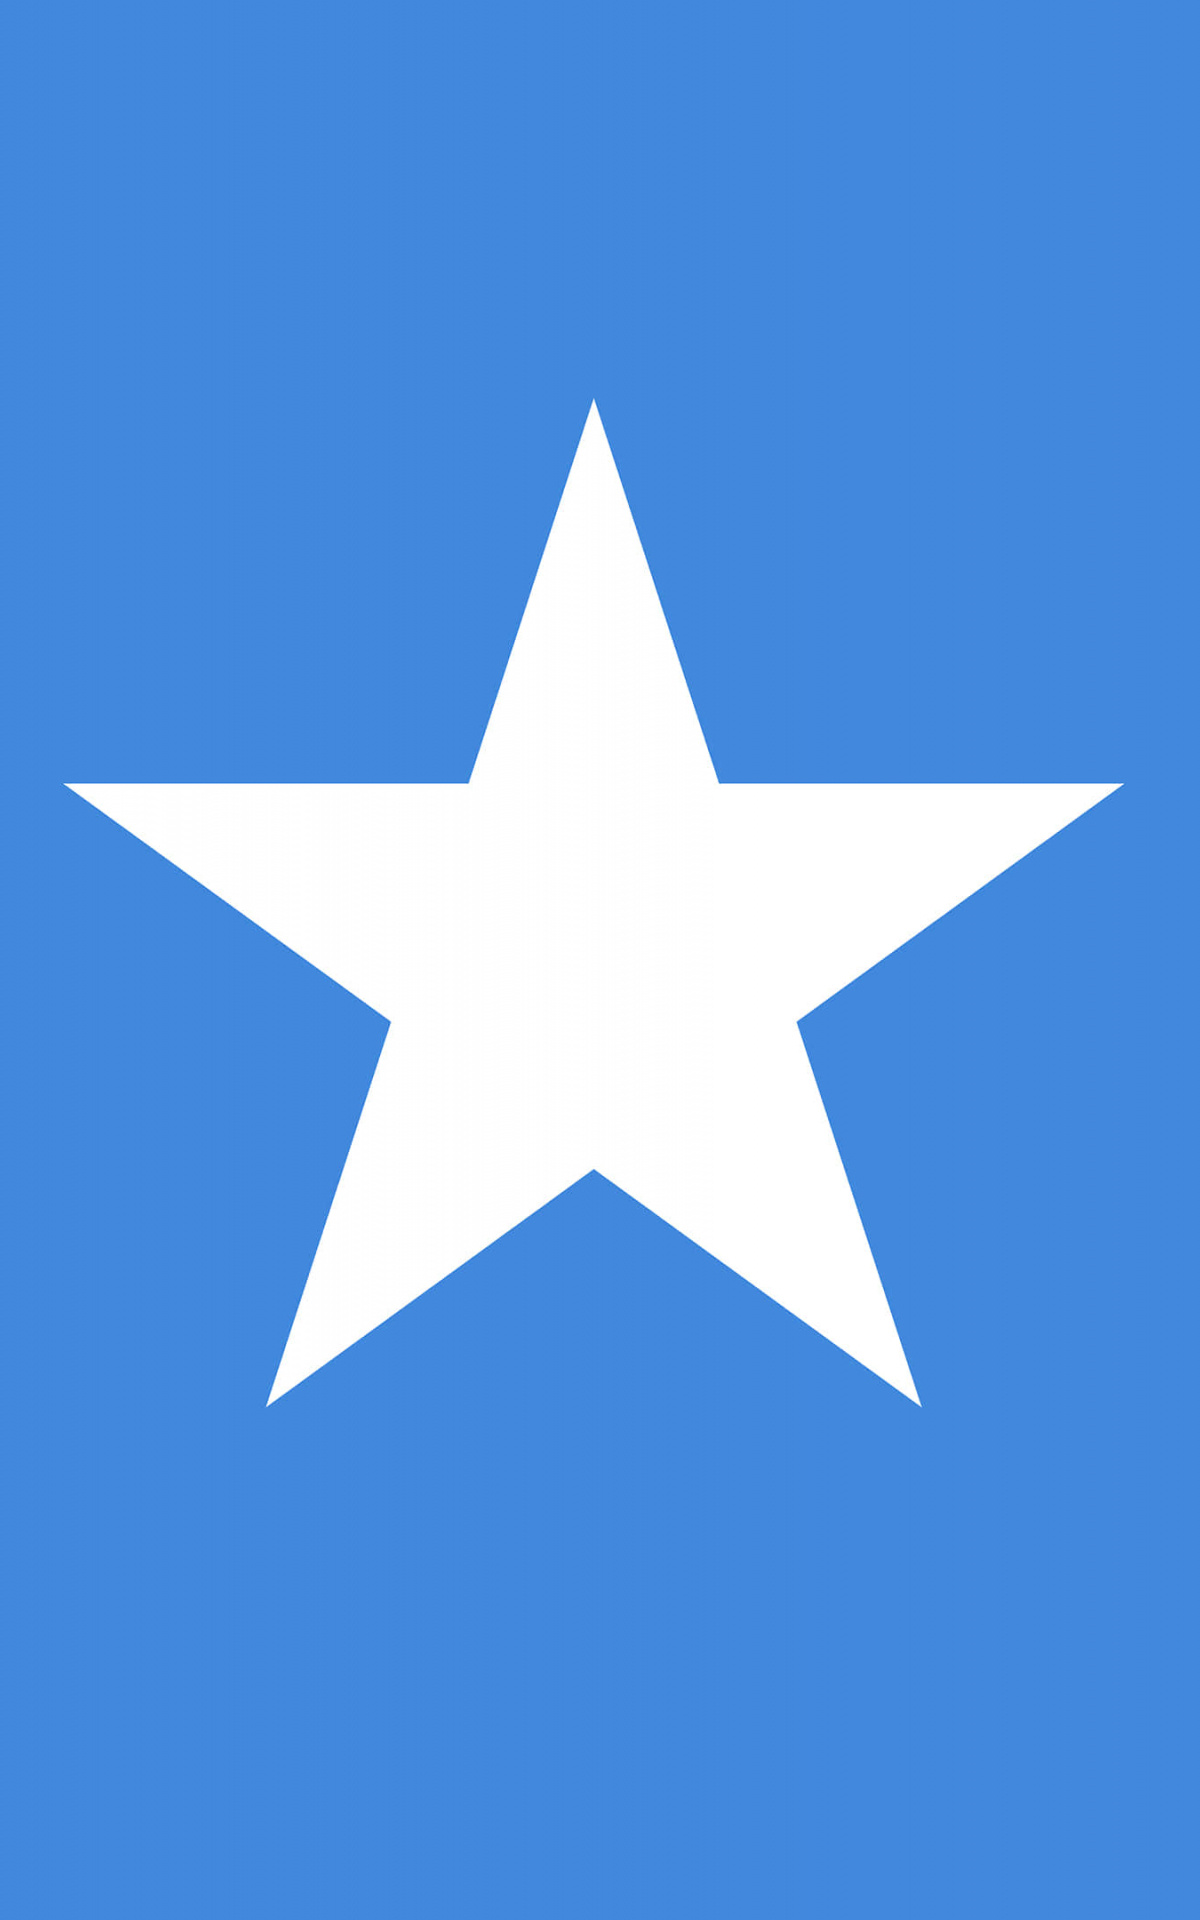 Somalia flag, Free download, UHD 4K wallpaper, 1200x1920 HD Handy